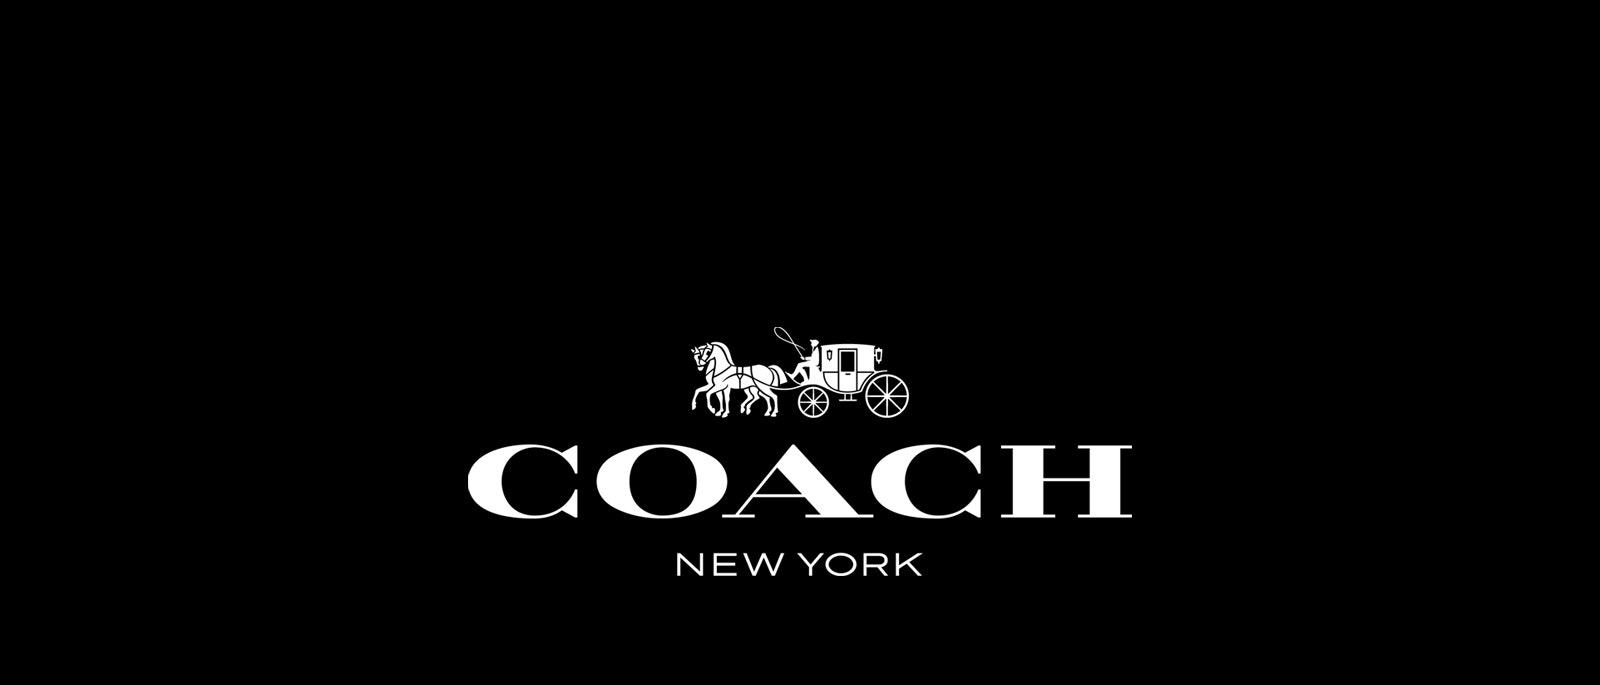 black coach logo background